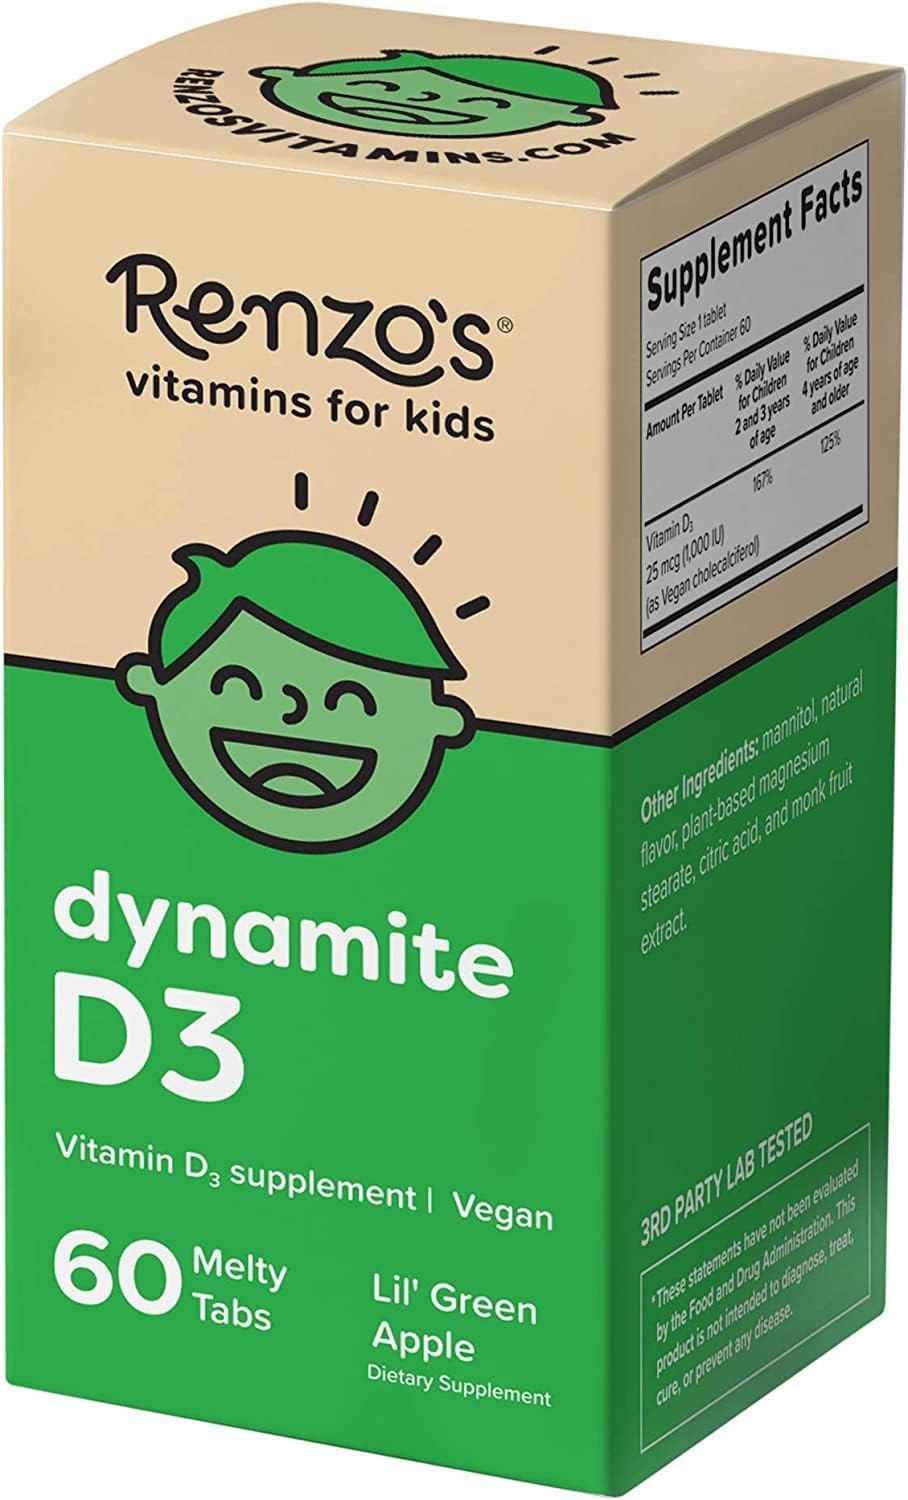 Renzo's Dynamite Vitamin D3 - Dissolving Kids Vitamin D3-60 Sugar-Free Melty Tabs, Lil? Green Apple Flavored